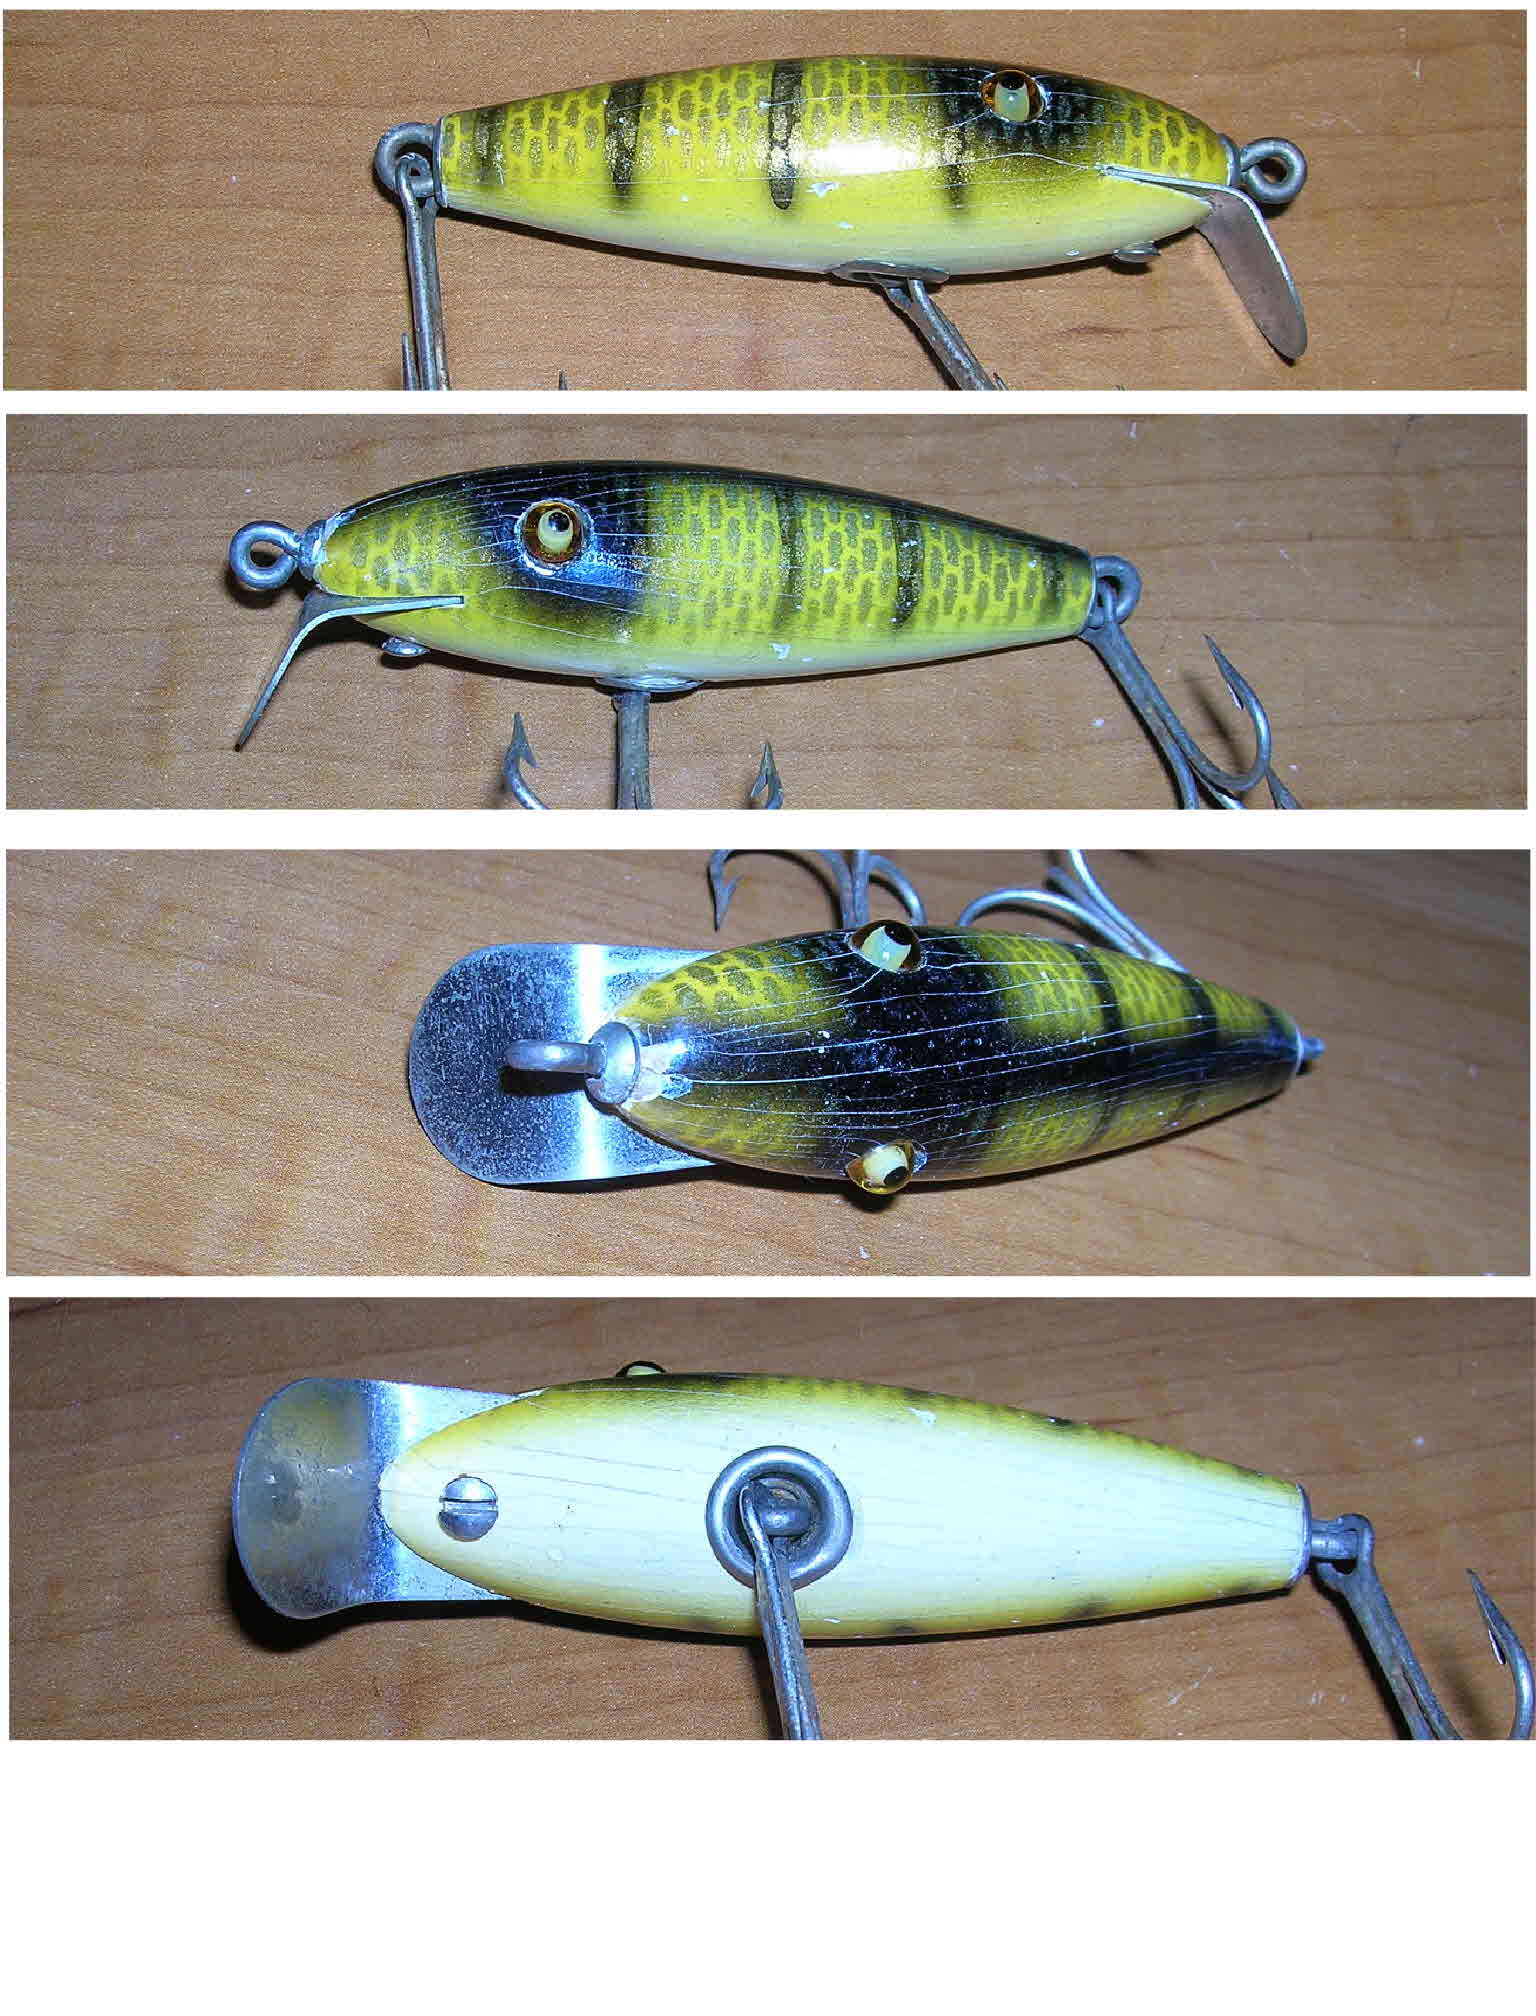 Shur Strike Plunker Lure  Antique fishing lures, Fishing lures